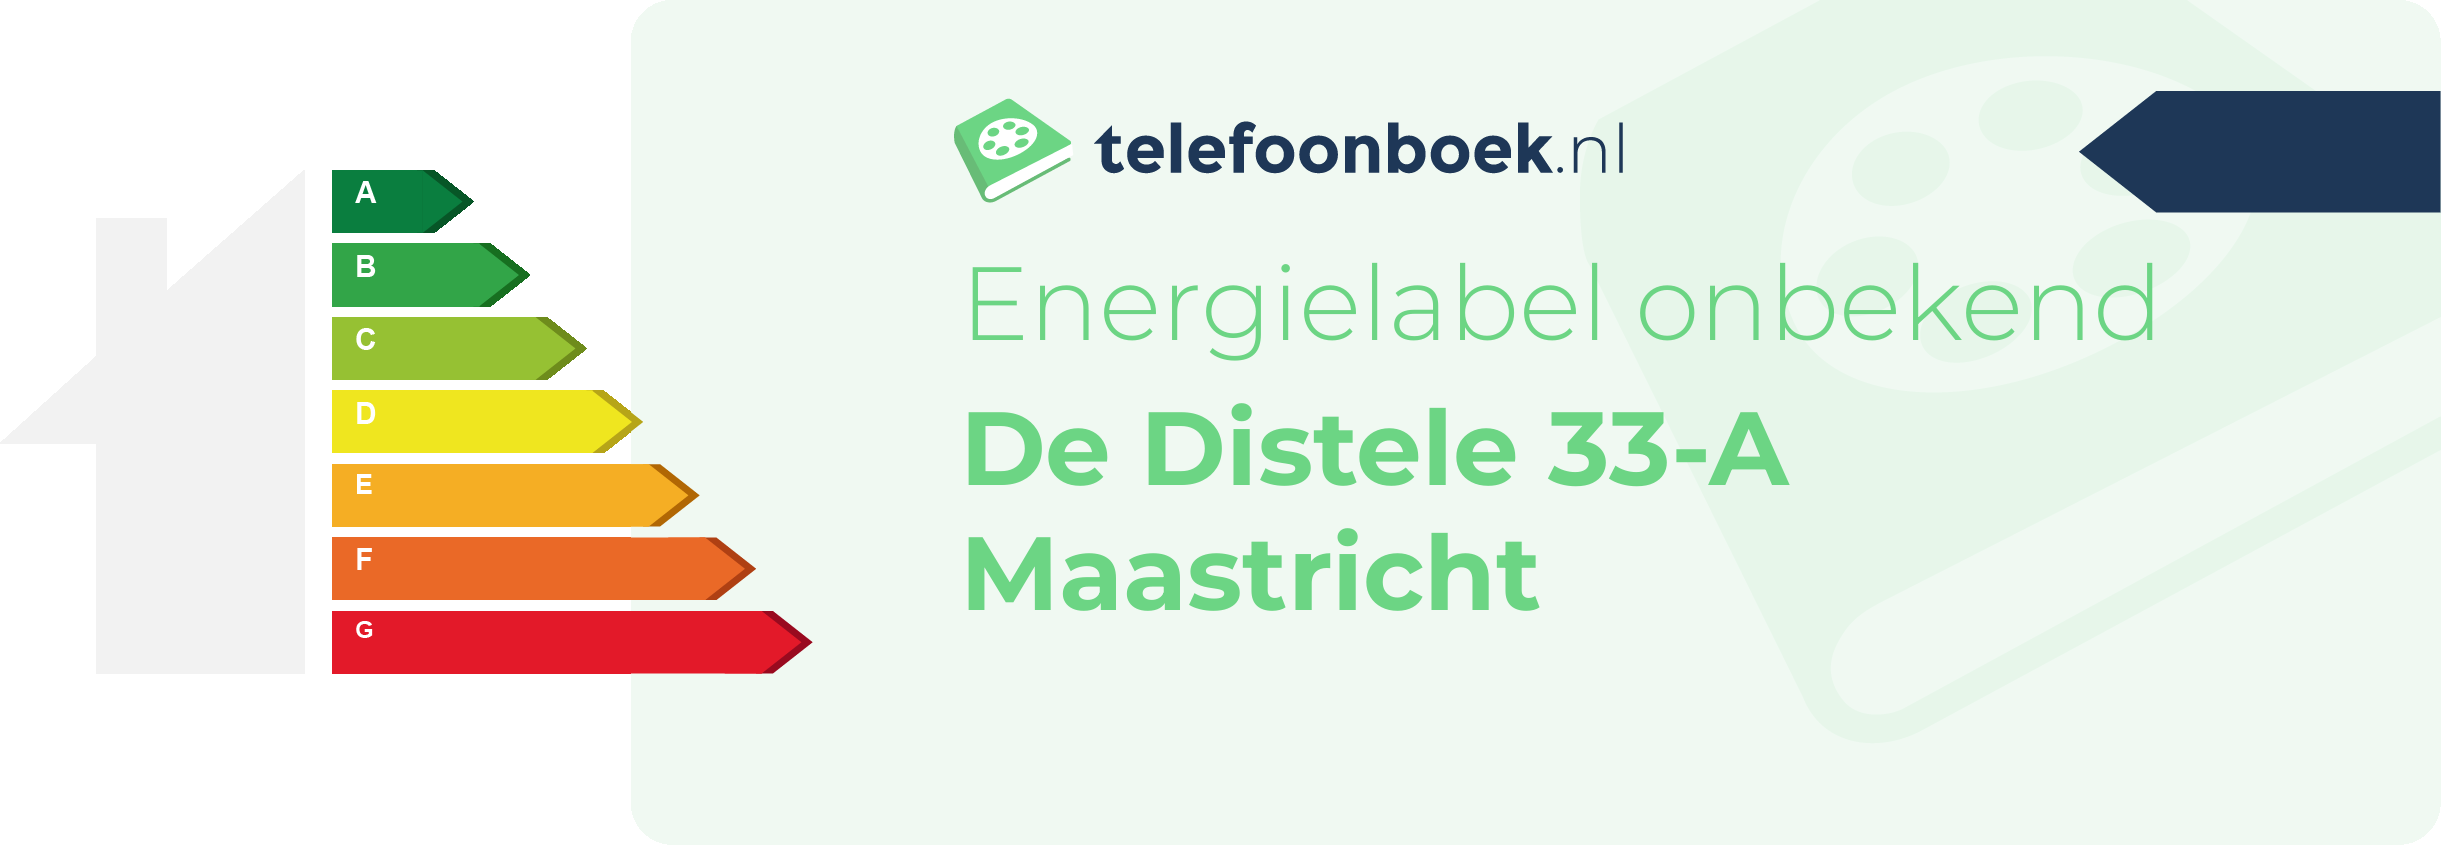 Energielabel De Distele 33-A Maastricht